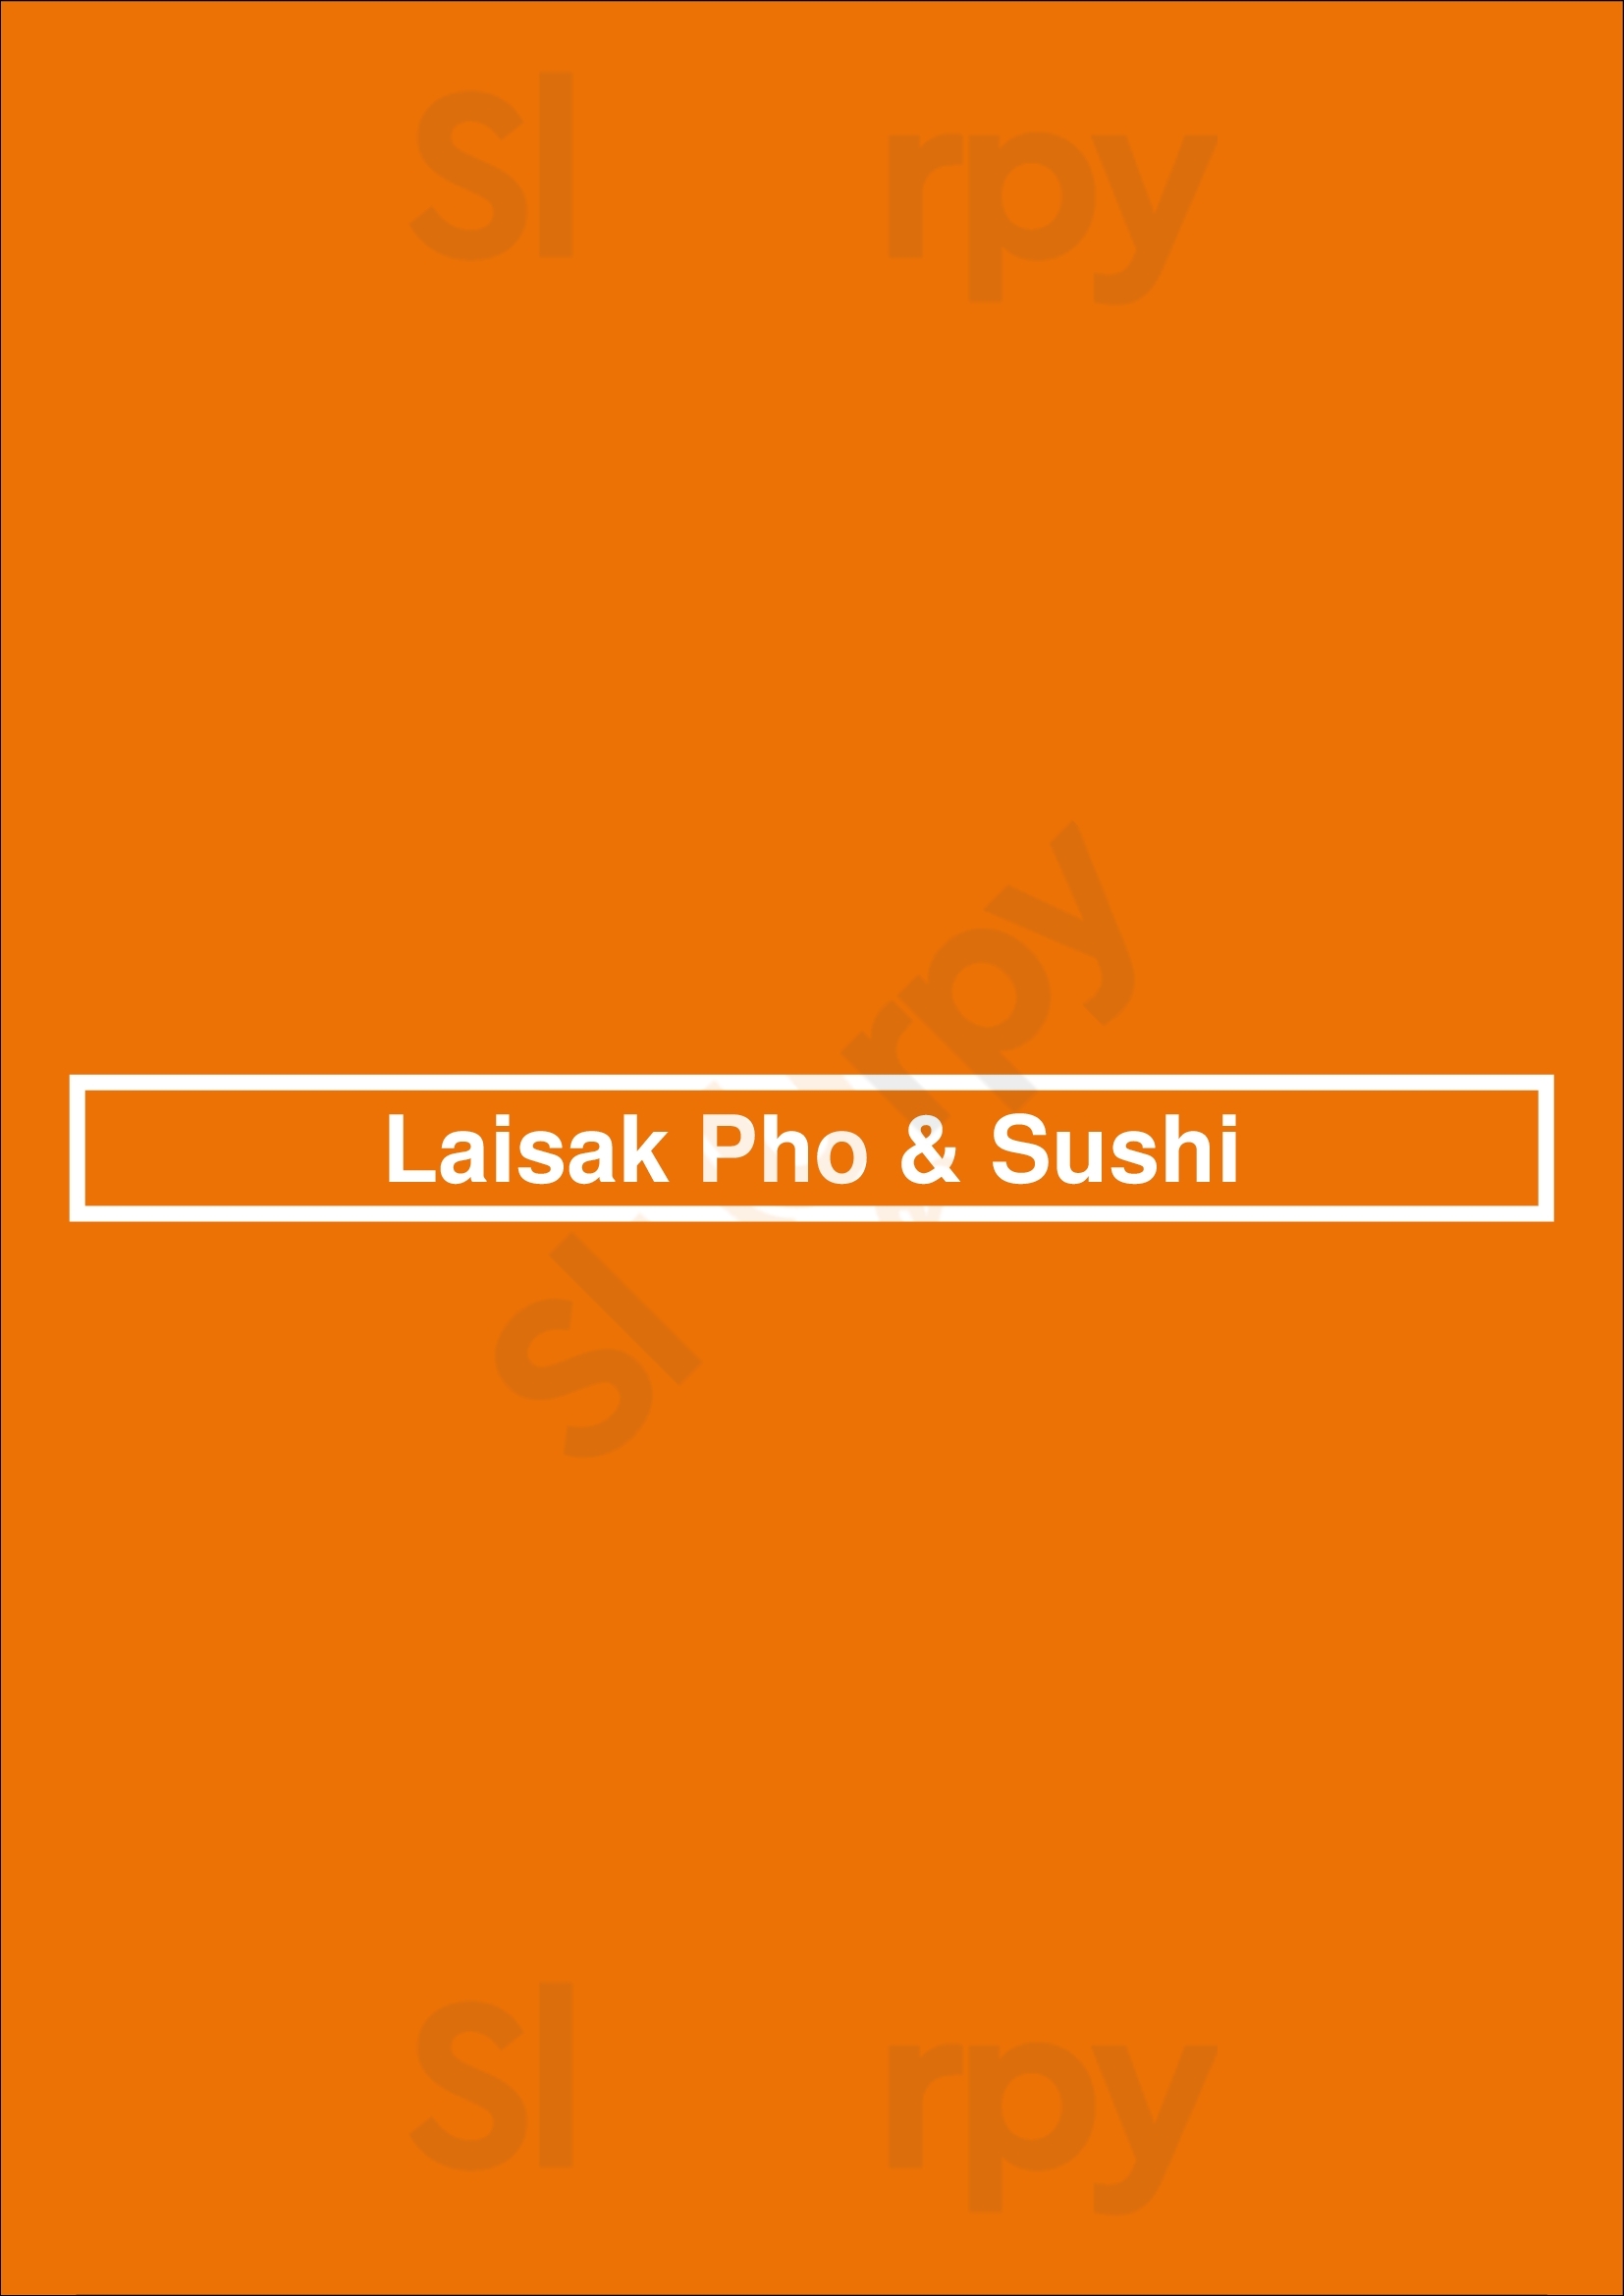 Laisak Pho & Sushi Greenwood Menu - 1